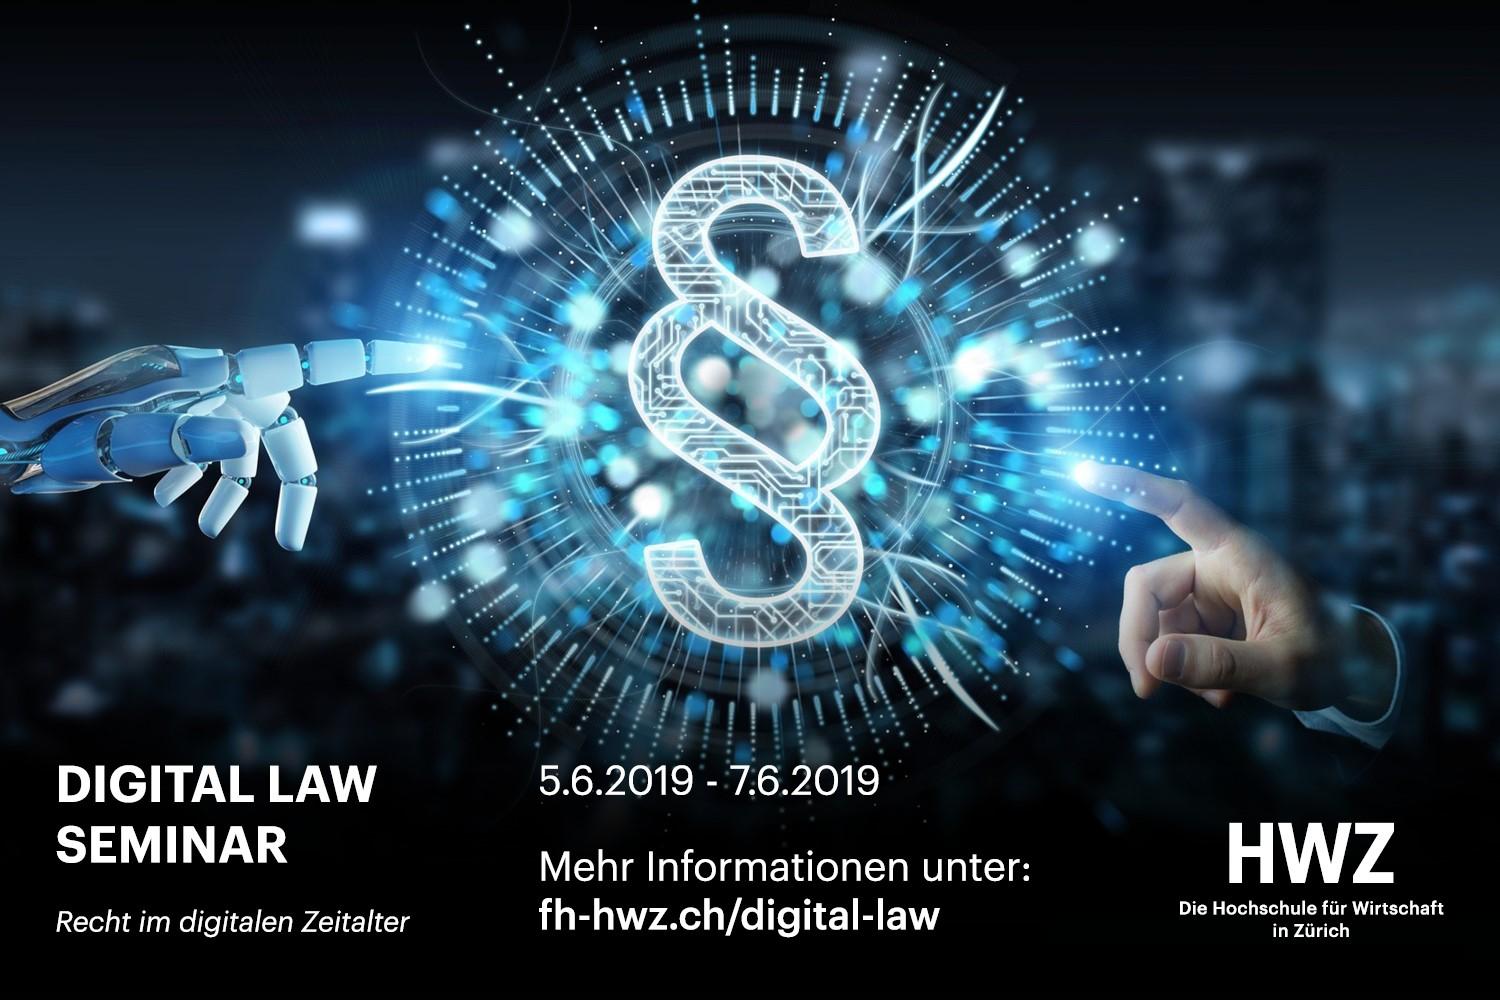 Seminar: Digital Law - Recht im digitalen Zeitalter